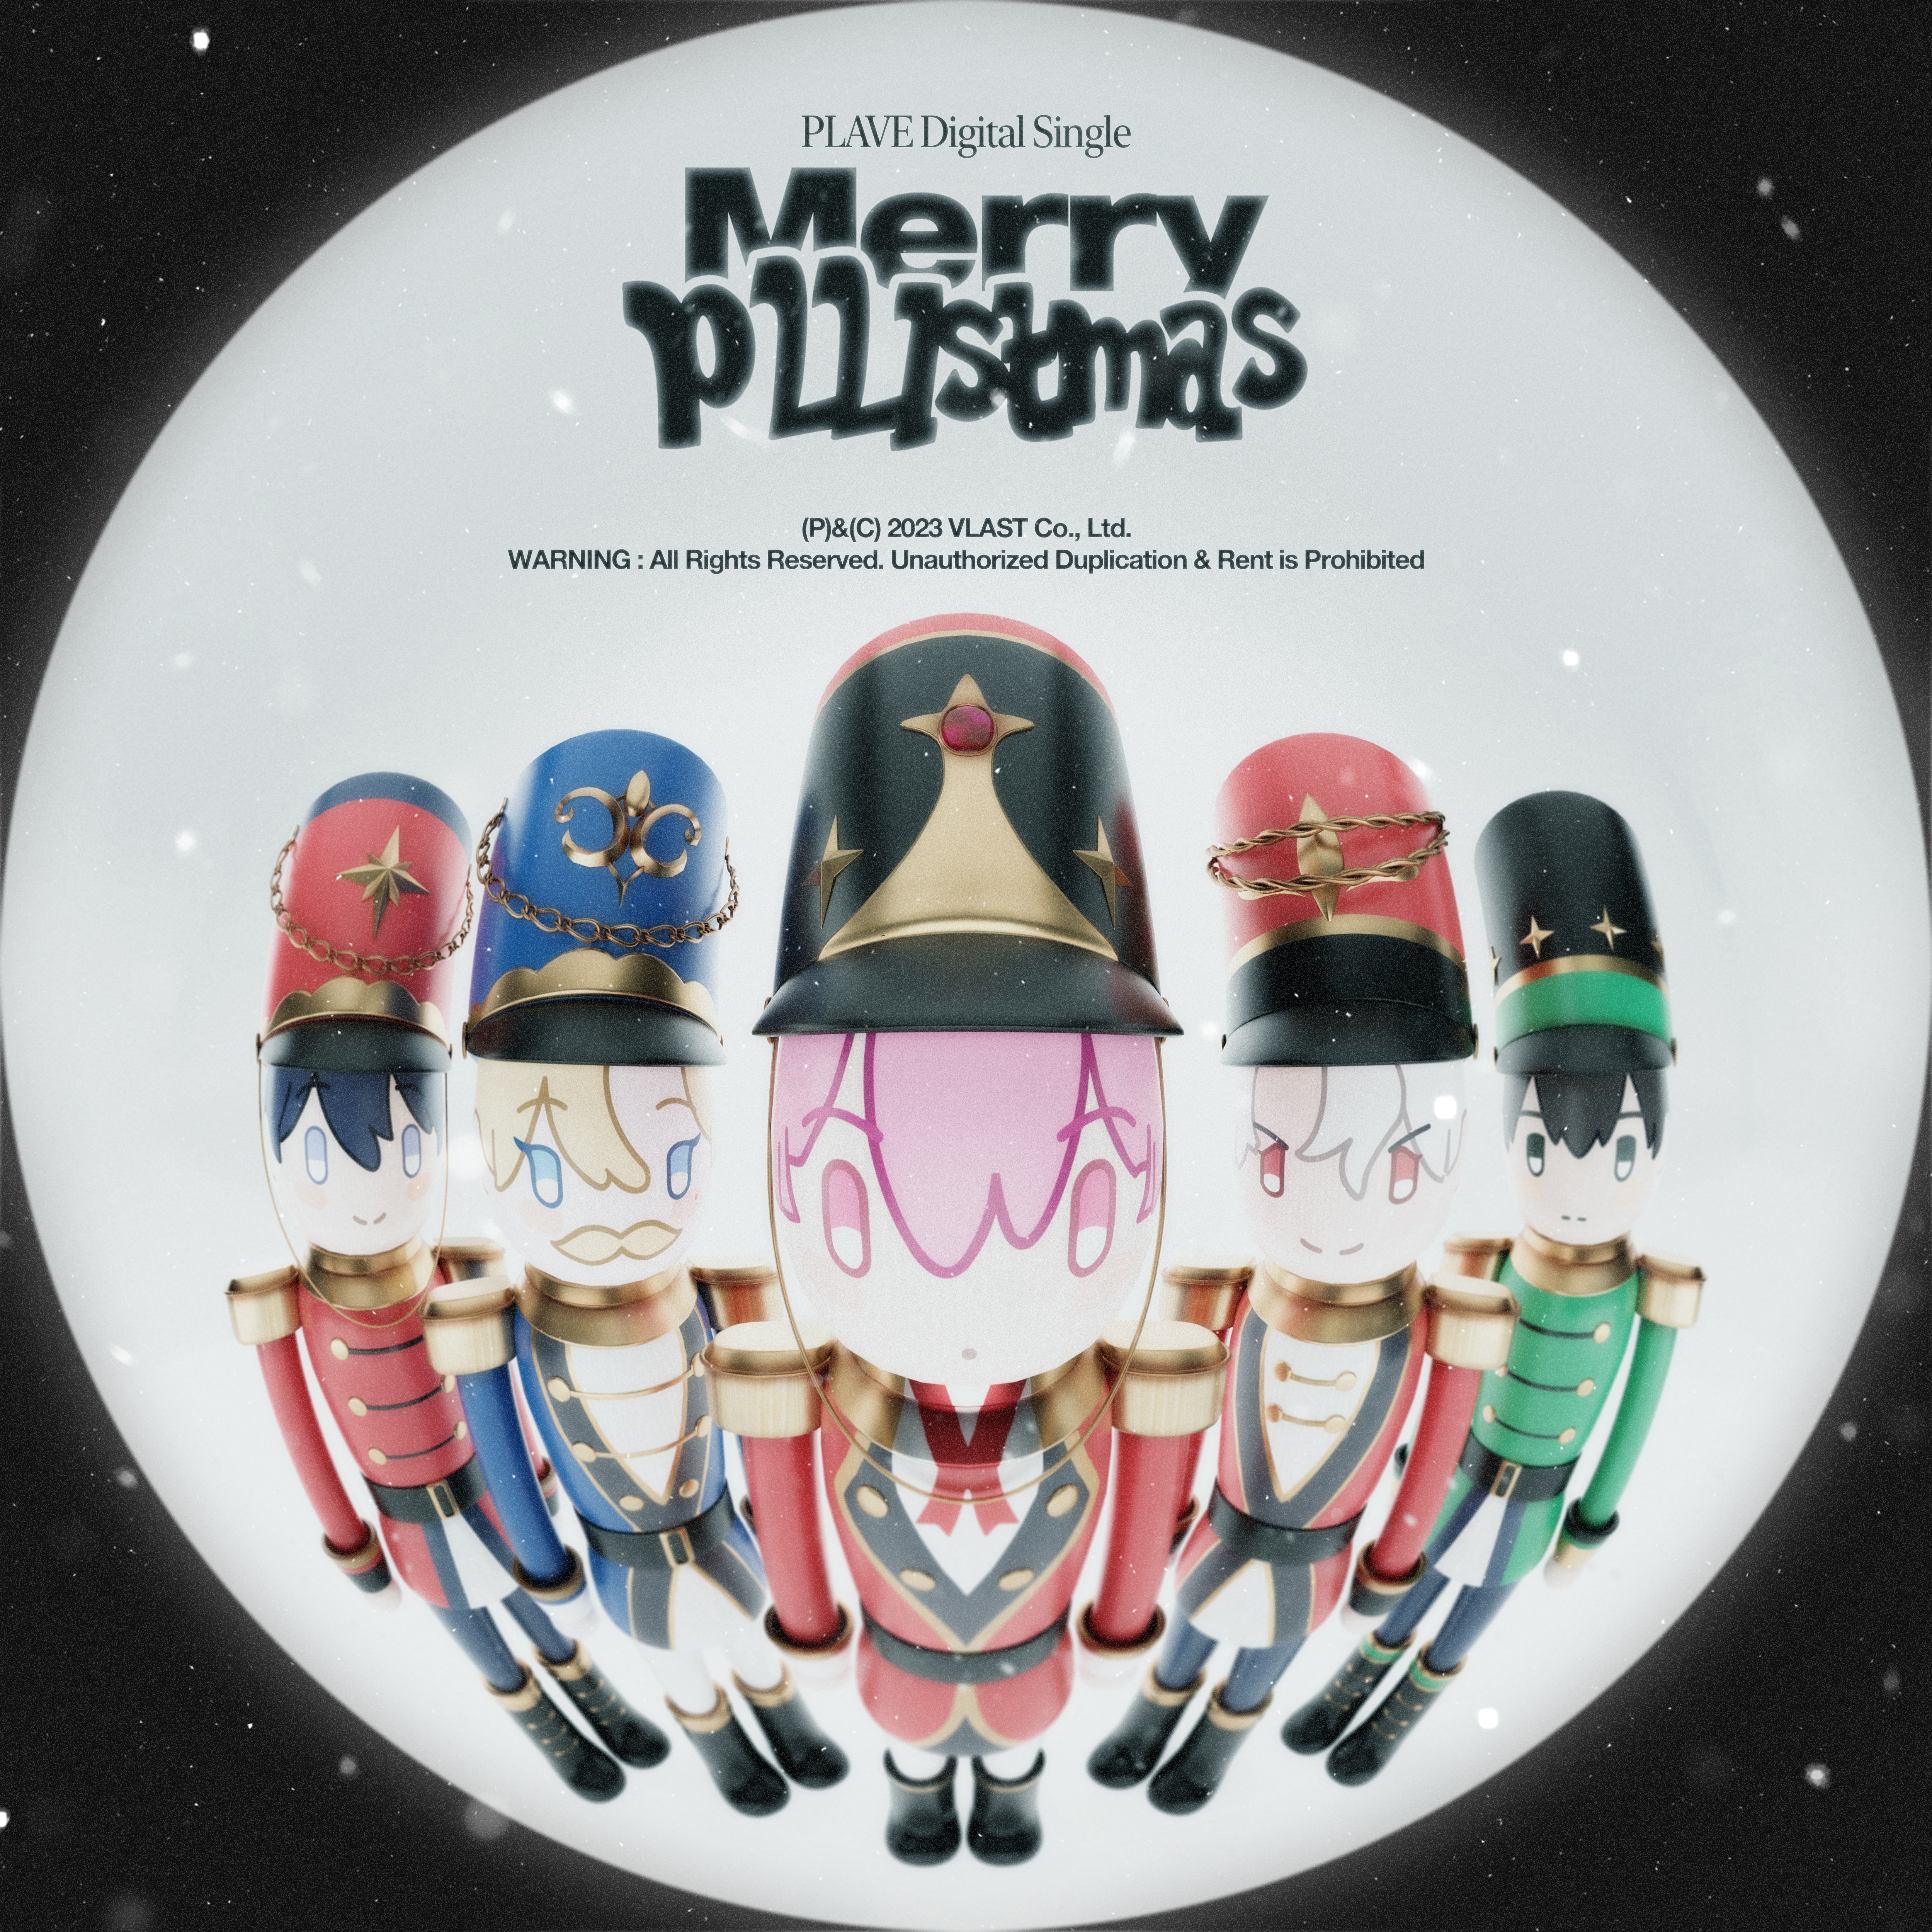 [情報] PLAVE Digital Single 'Merry PLLIstmas'